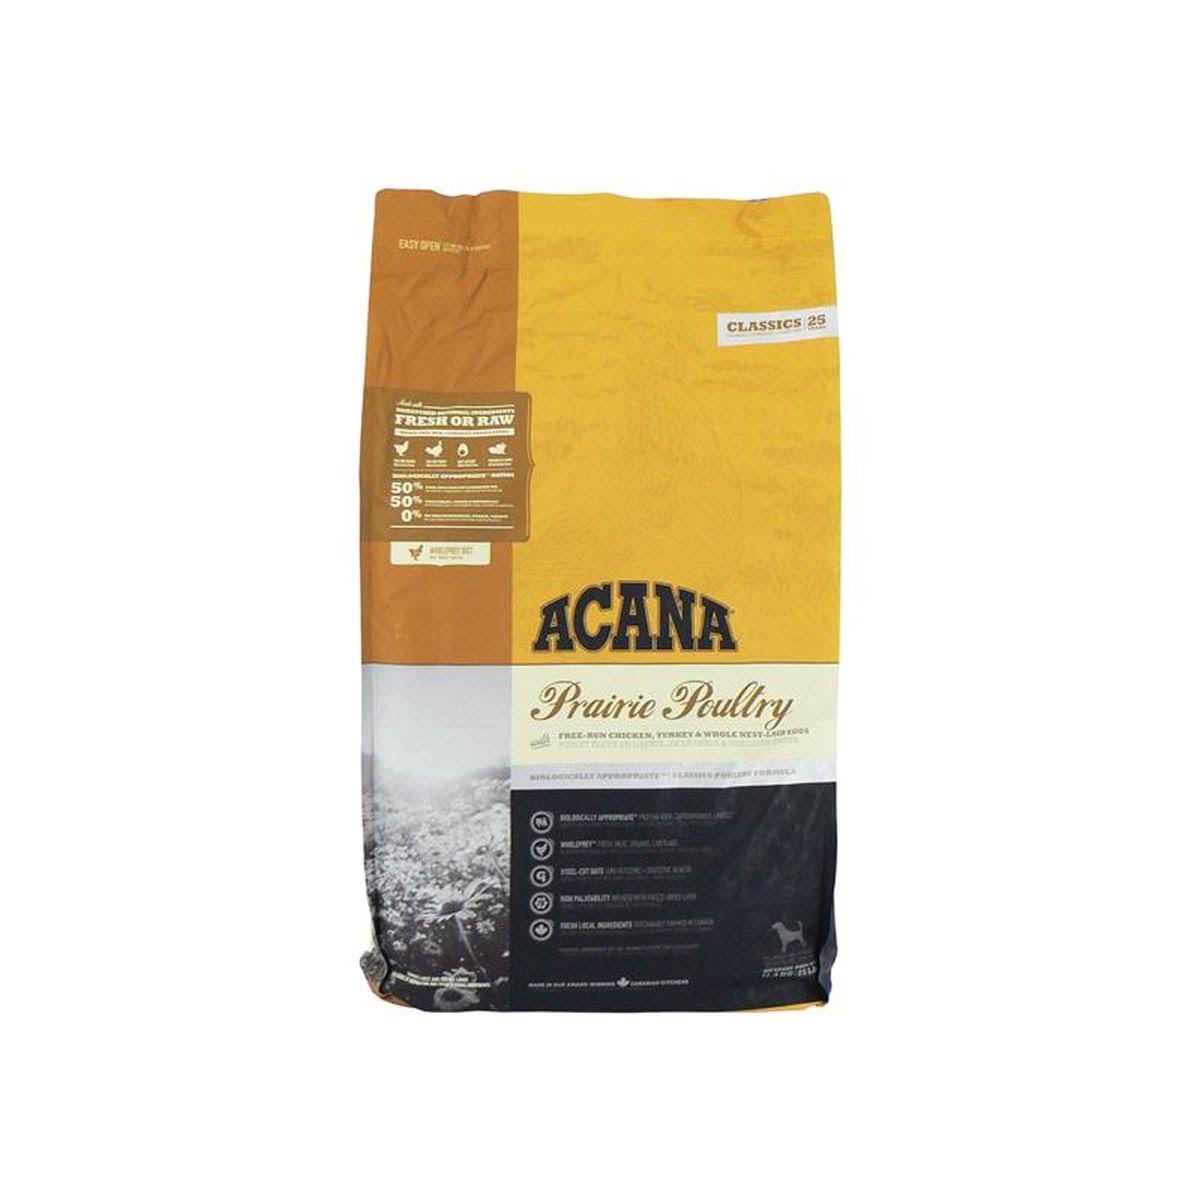 Acana Prairie Poultry Dog Food - 11.4kg